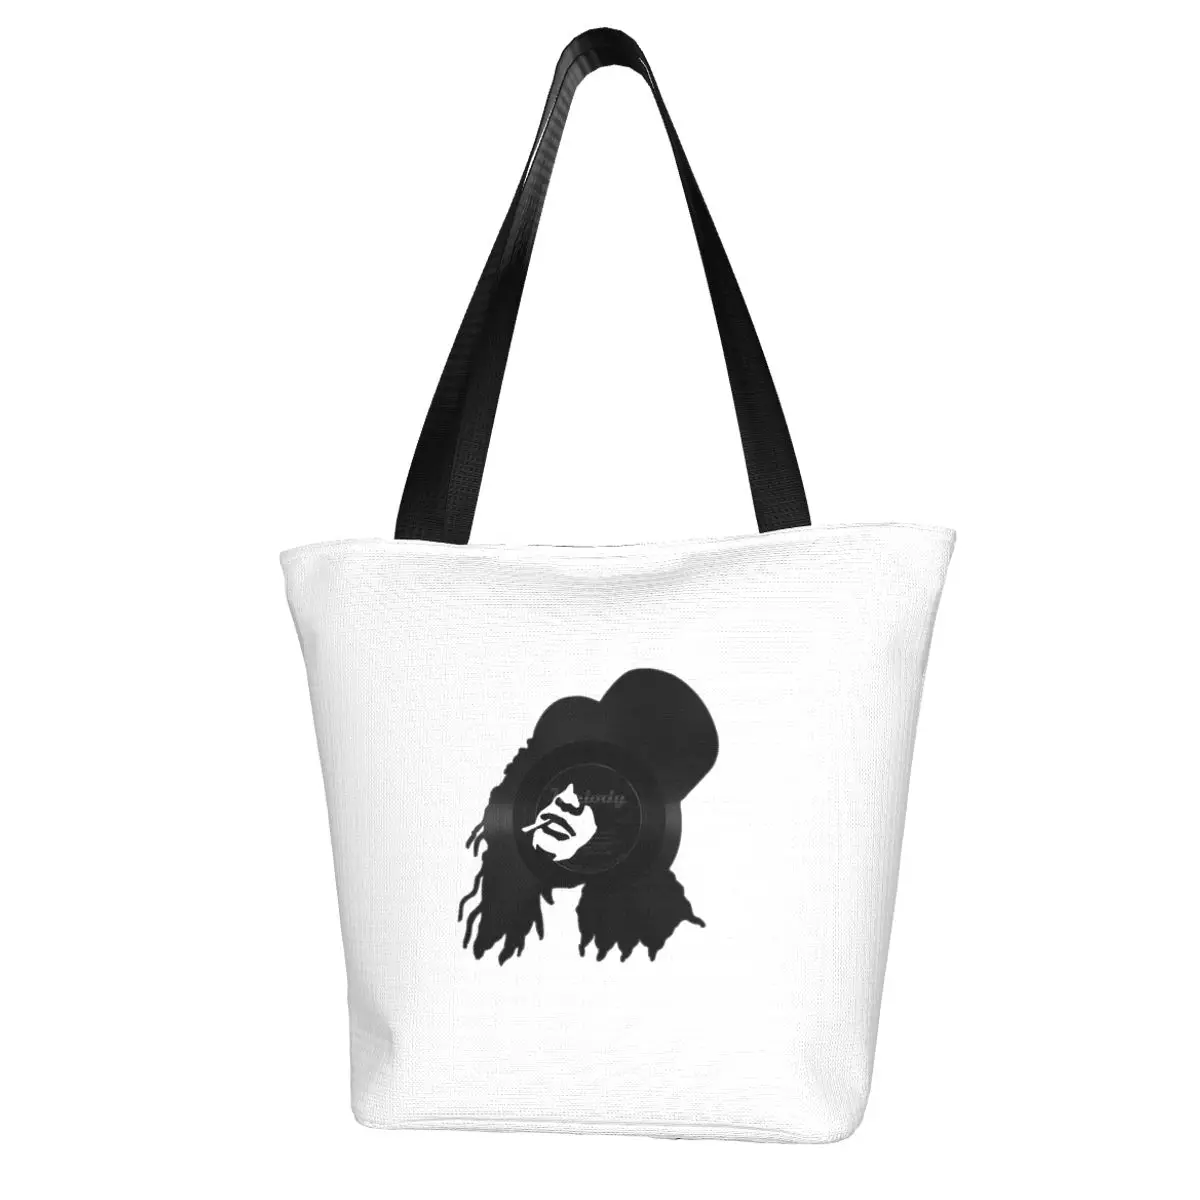 Guns N' Rose Shopping Bag Aesthetic Cloth Outdoor Handbag Female Fashion Bags